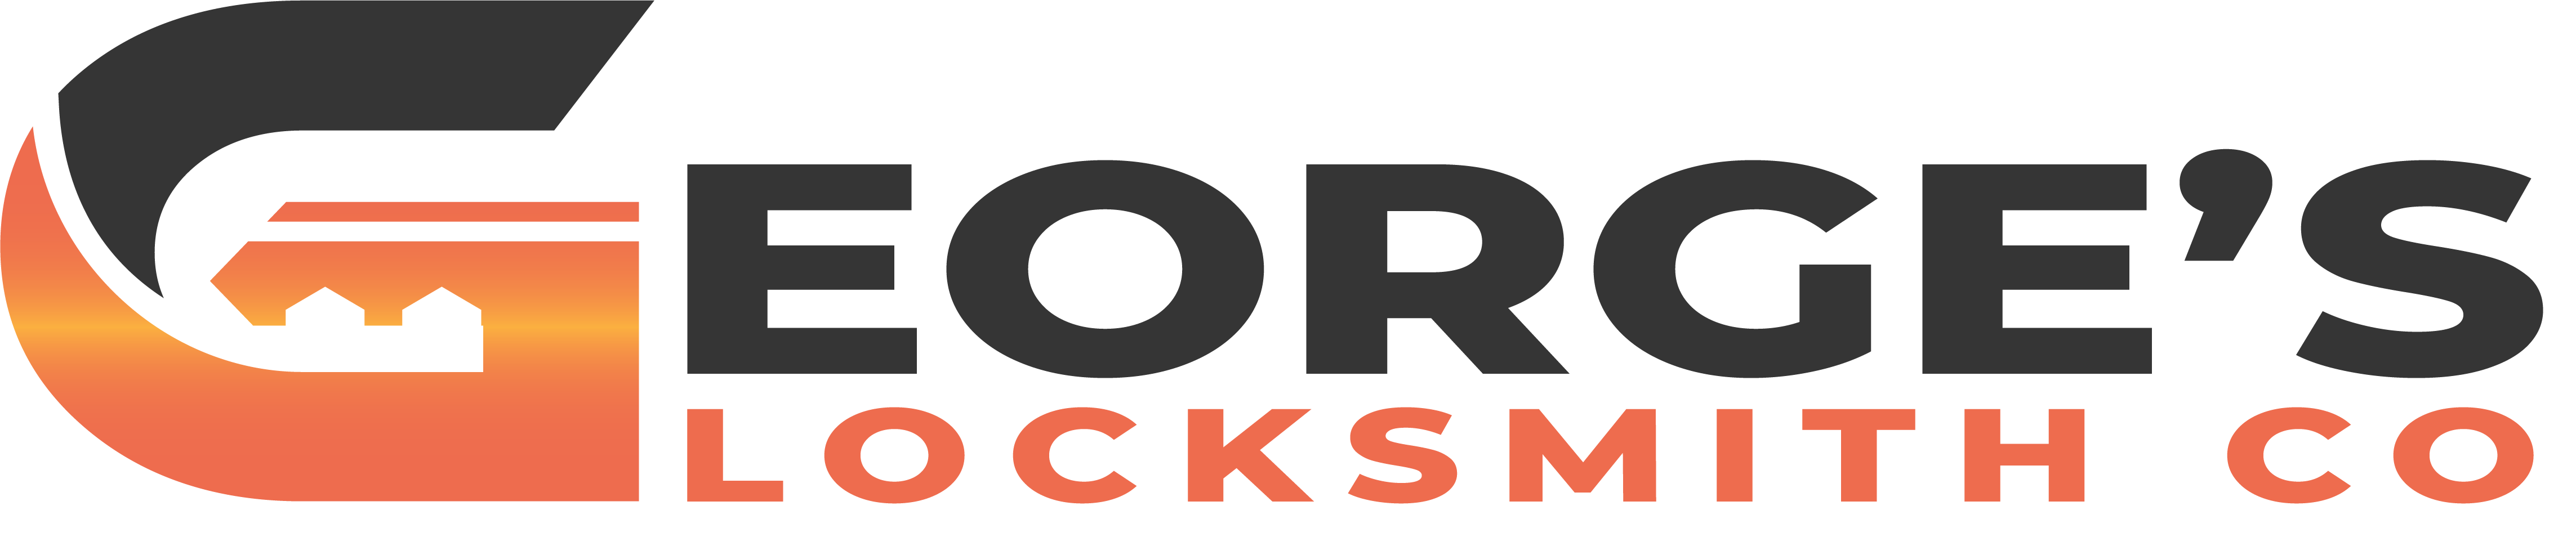 georges-locksmith-co-logo-long